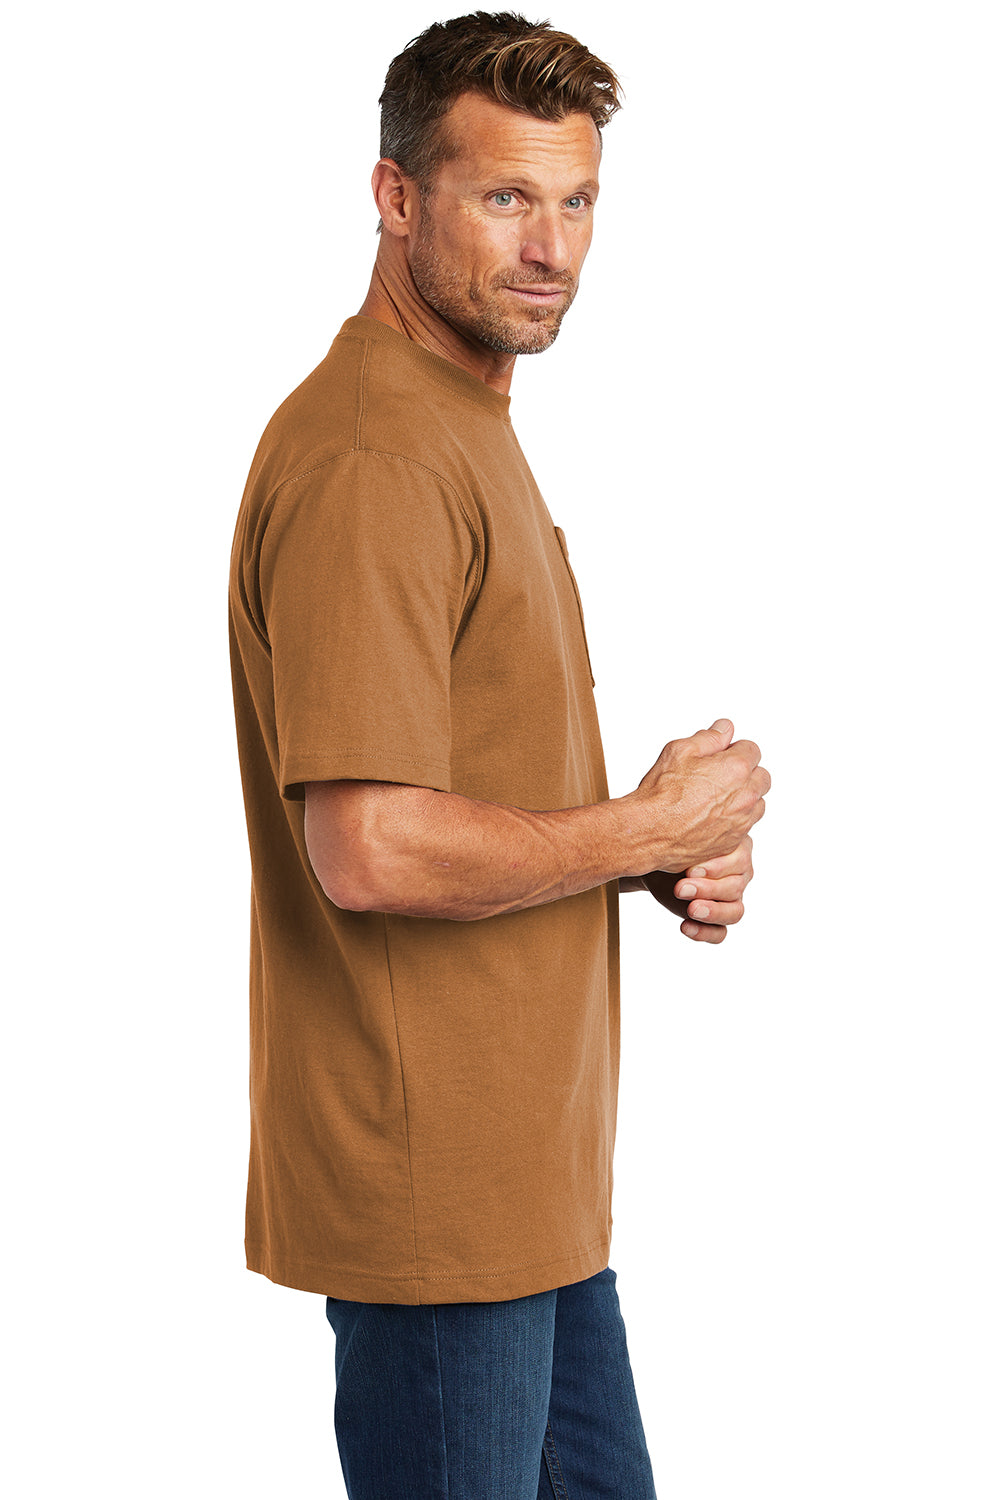 Carhartt CTK87/CTTK87 Mens Workwear Short Sleeve Crewneck T-Shirt w/ Pocket Carhartt Brown Model Side